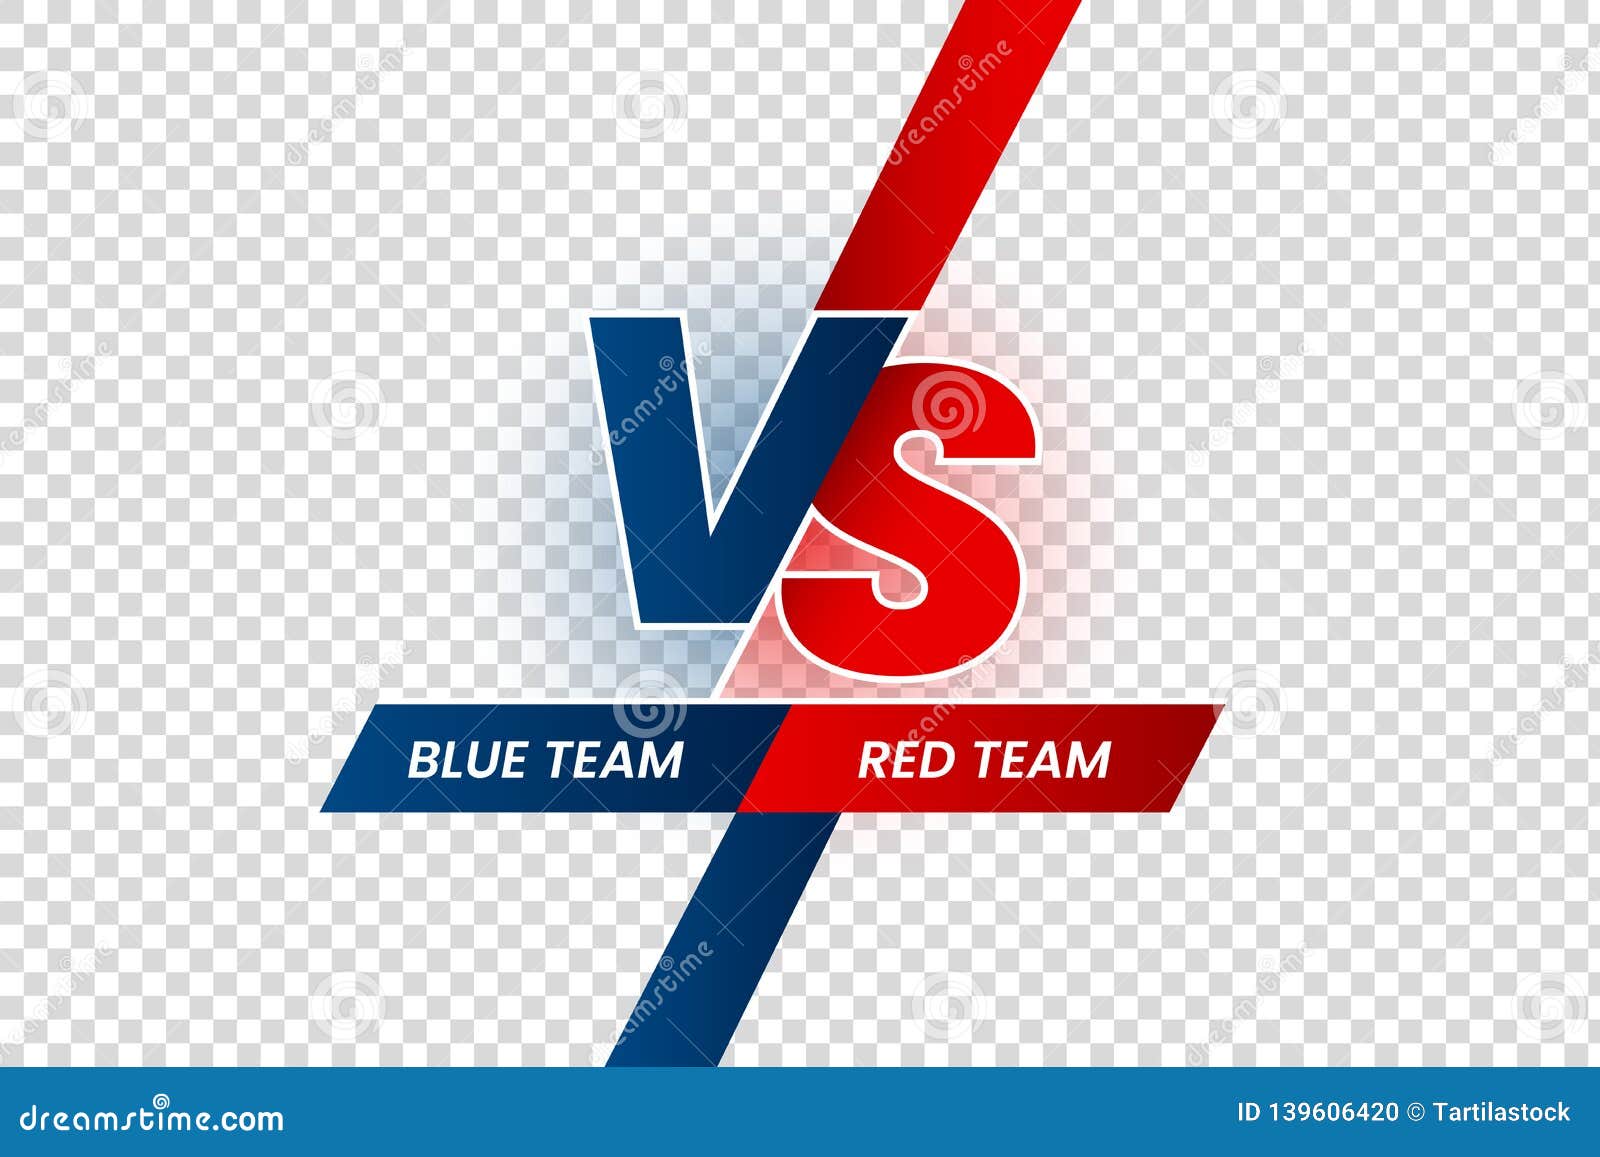 Versus Clipart Transparent Background, Versus Battle Blue Team And Red  Transparant Background Template, Versus, Vs, Battle PNG Image For Free  Download